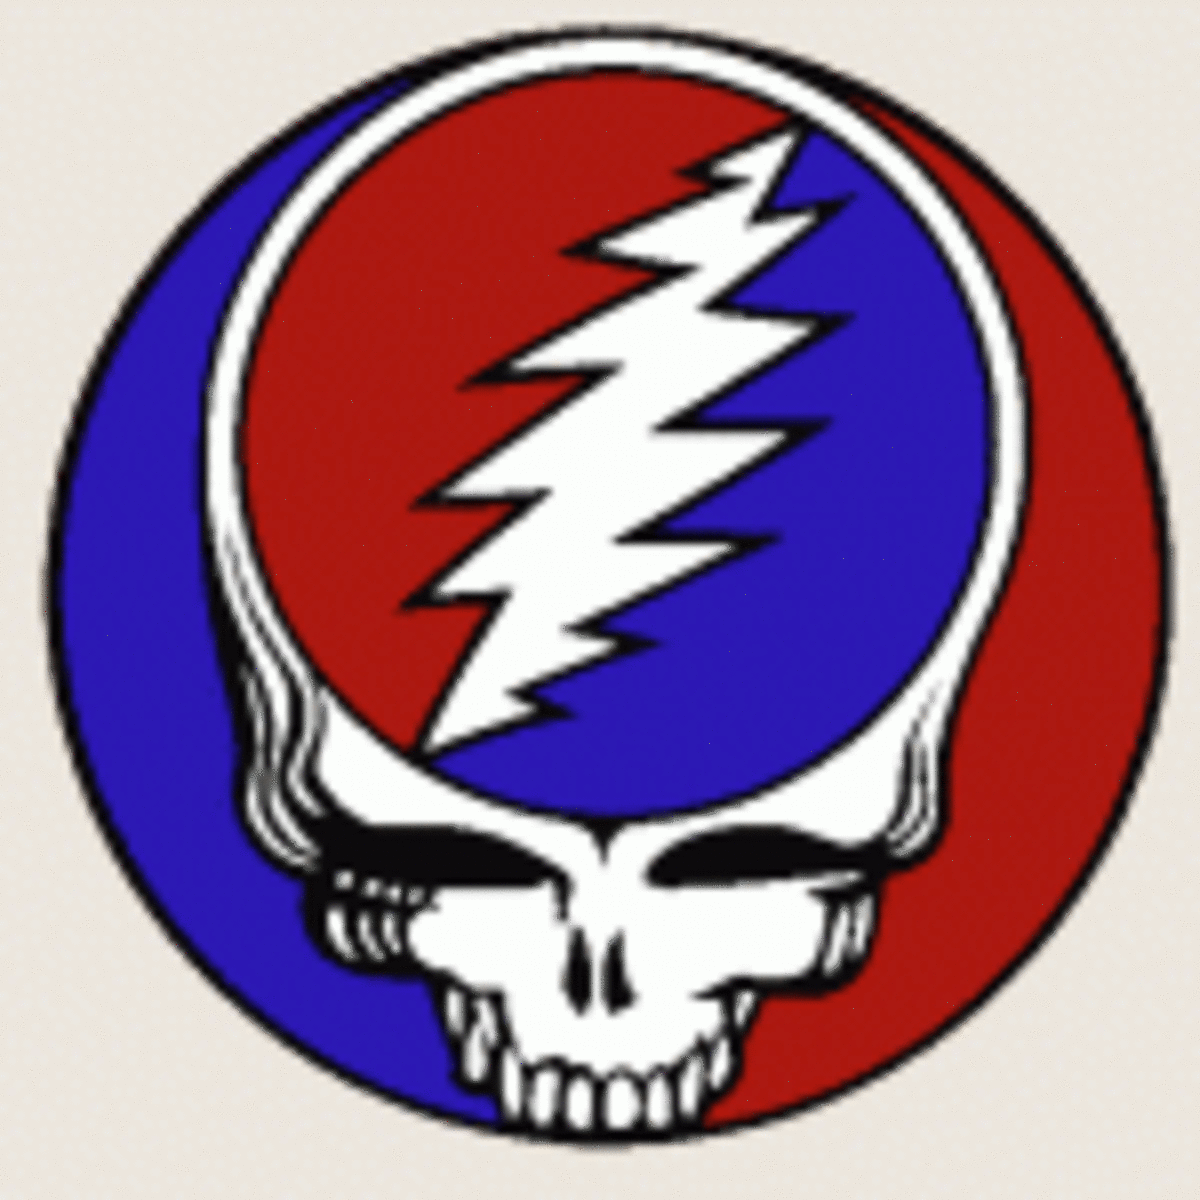 Grateful Dead logo